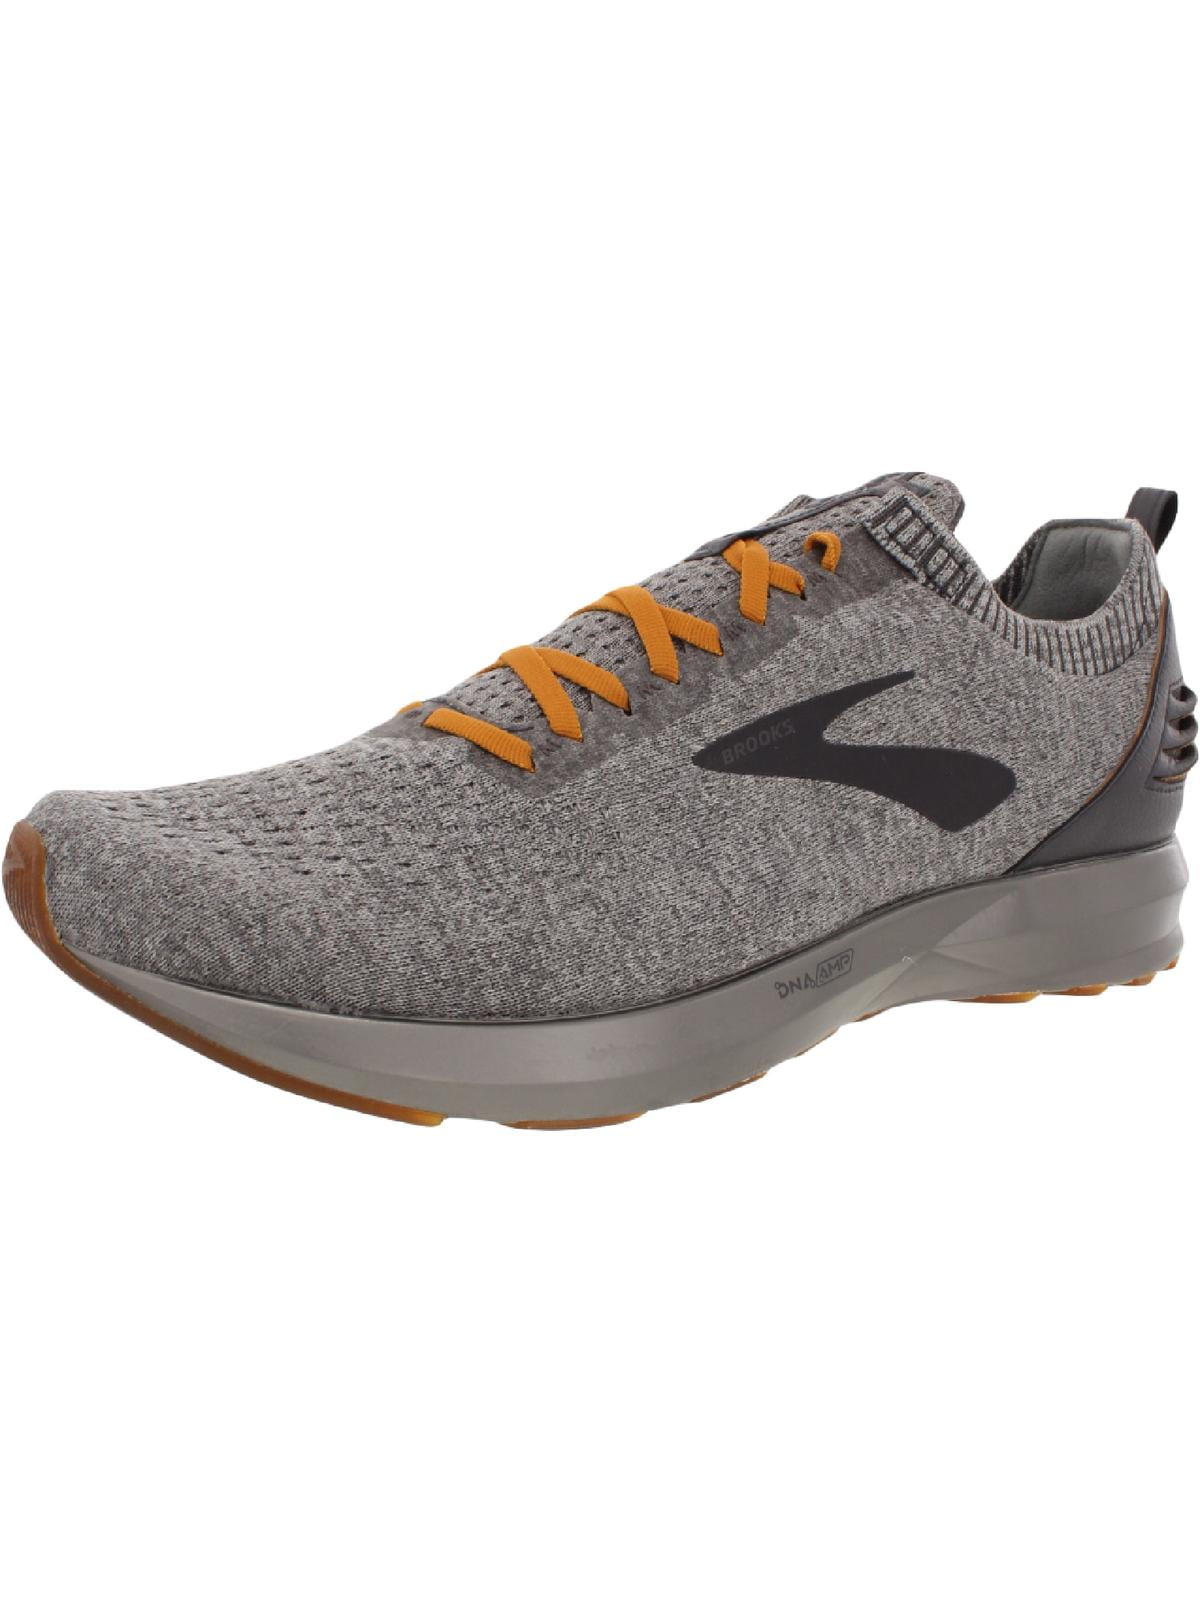 Men's Brooks Levitate 2 Running Athletic Training Shoes Grey Grey Ocher 